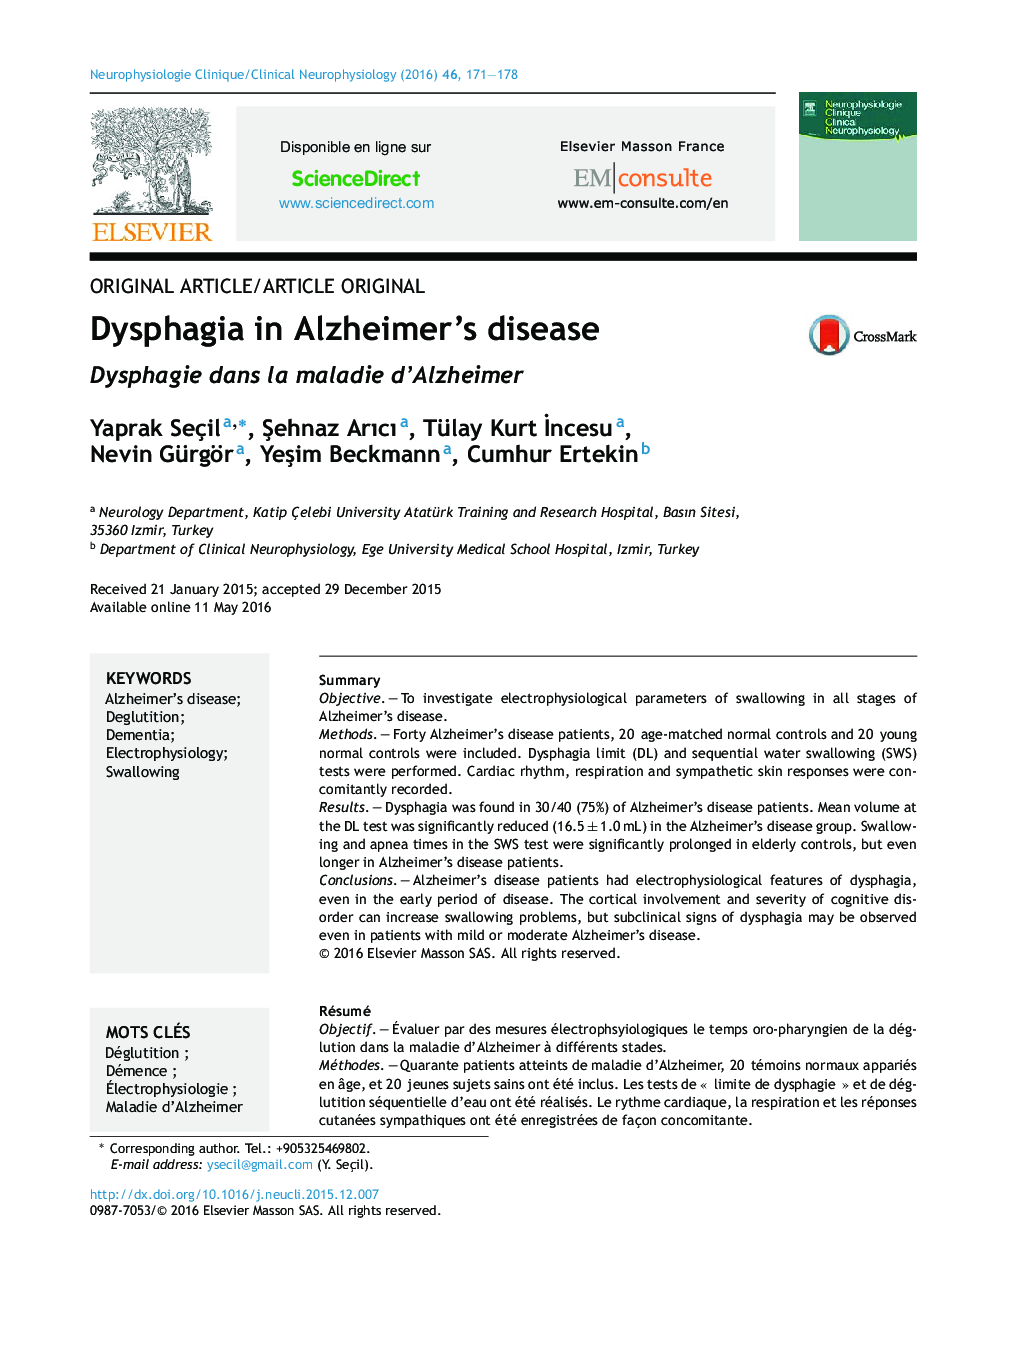 Dysphagia in Alzheimer's disease